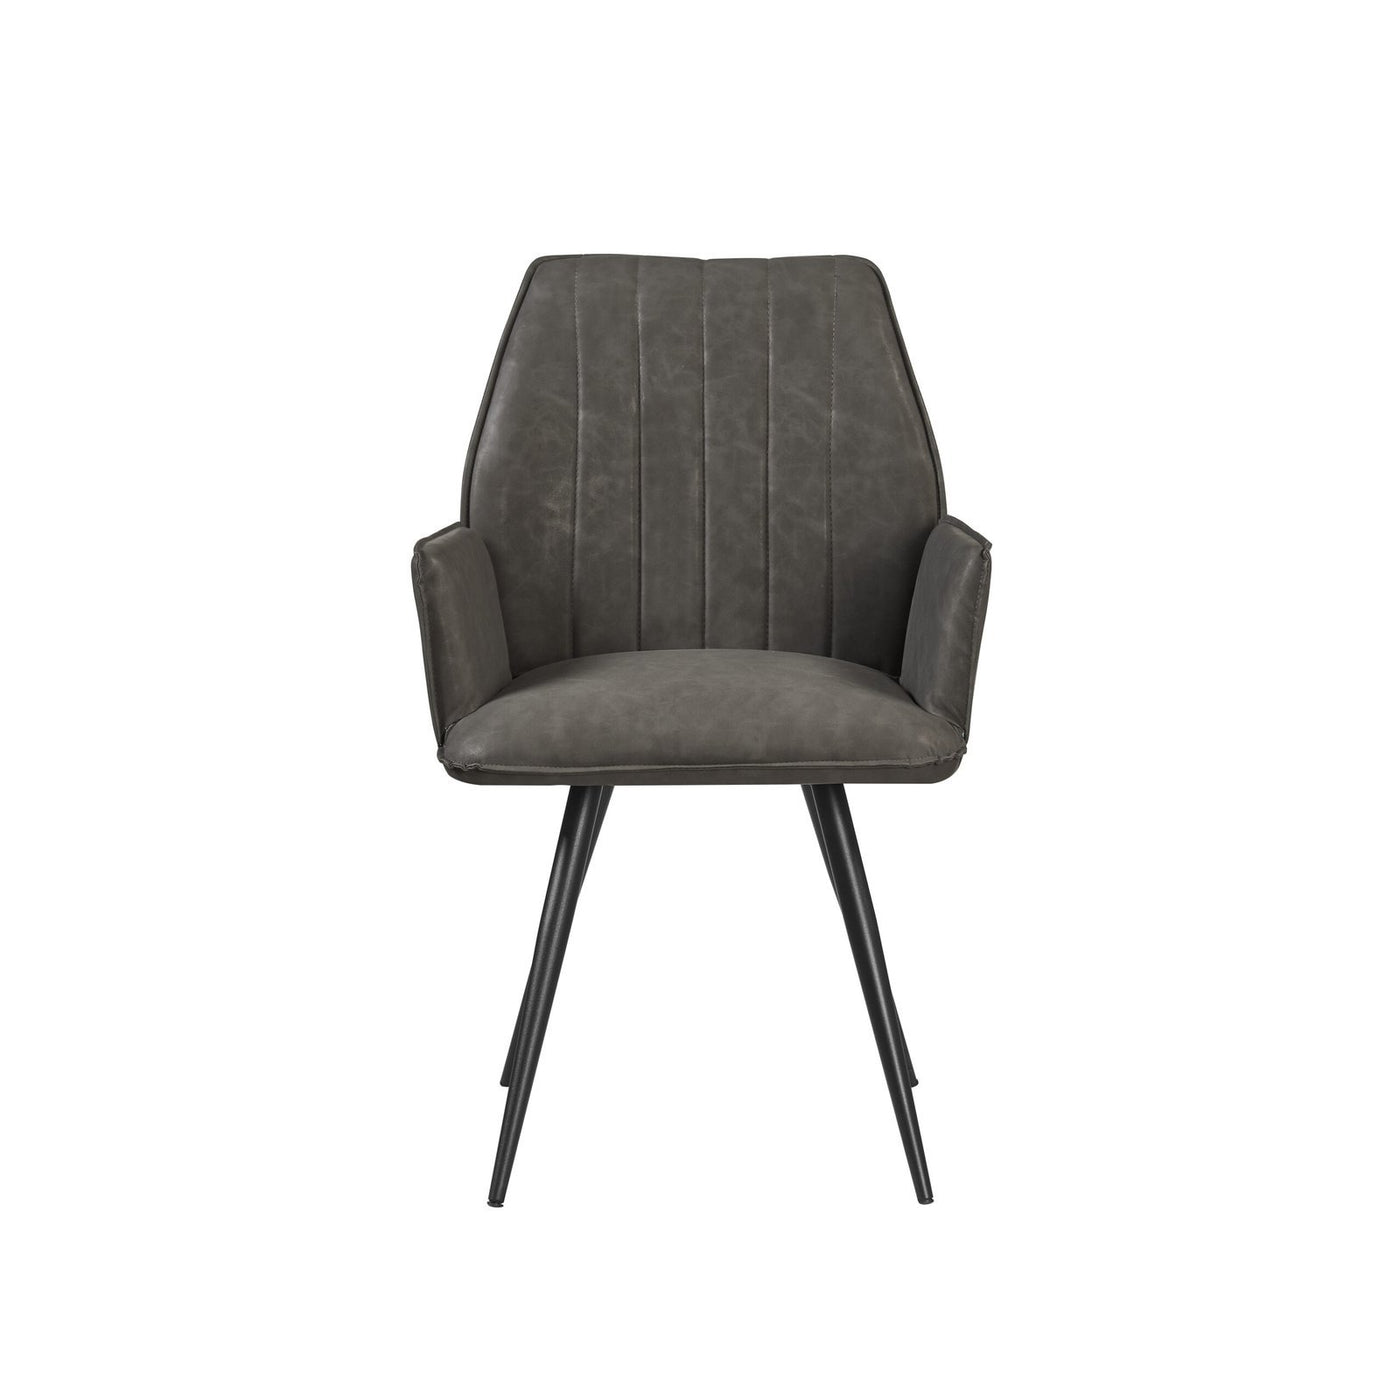 Distressed Dark Grey, Dining Chair - Grab Some Furniture